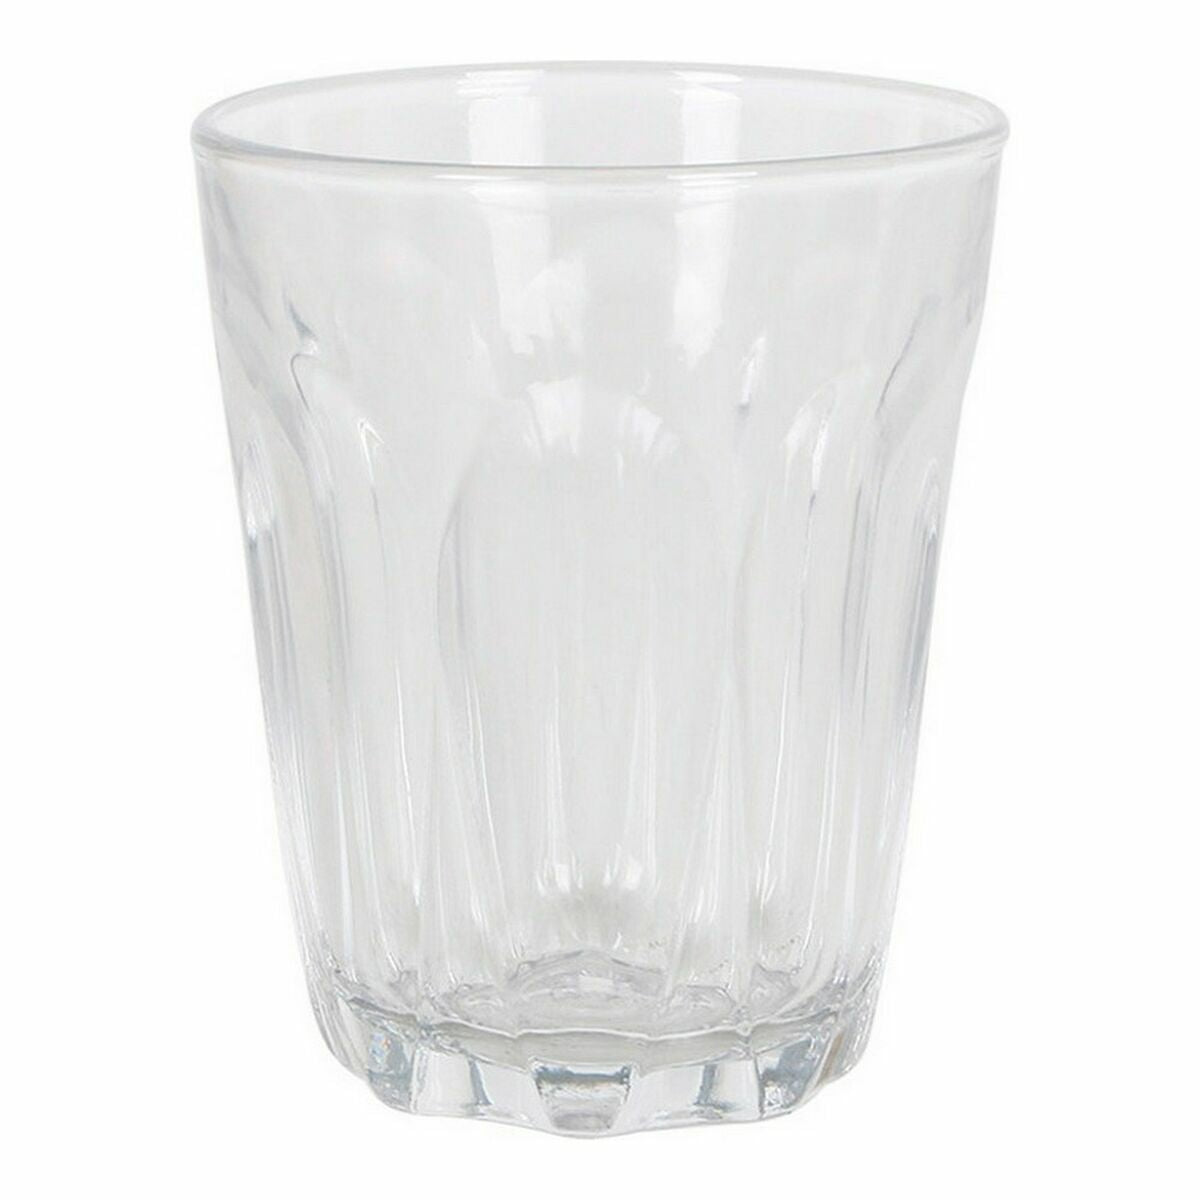 Set of glasses Duralex Provence Crystal Transparent (6 pcs)